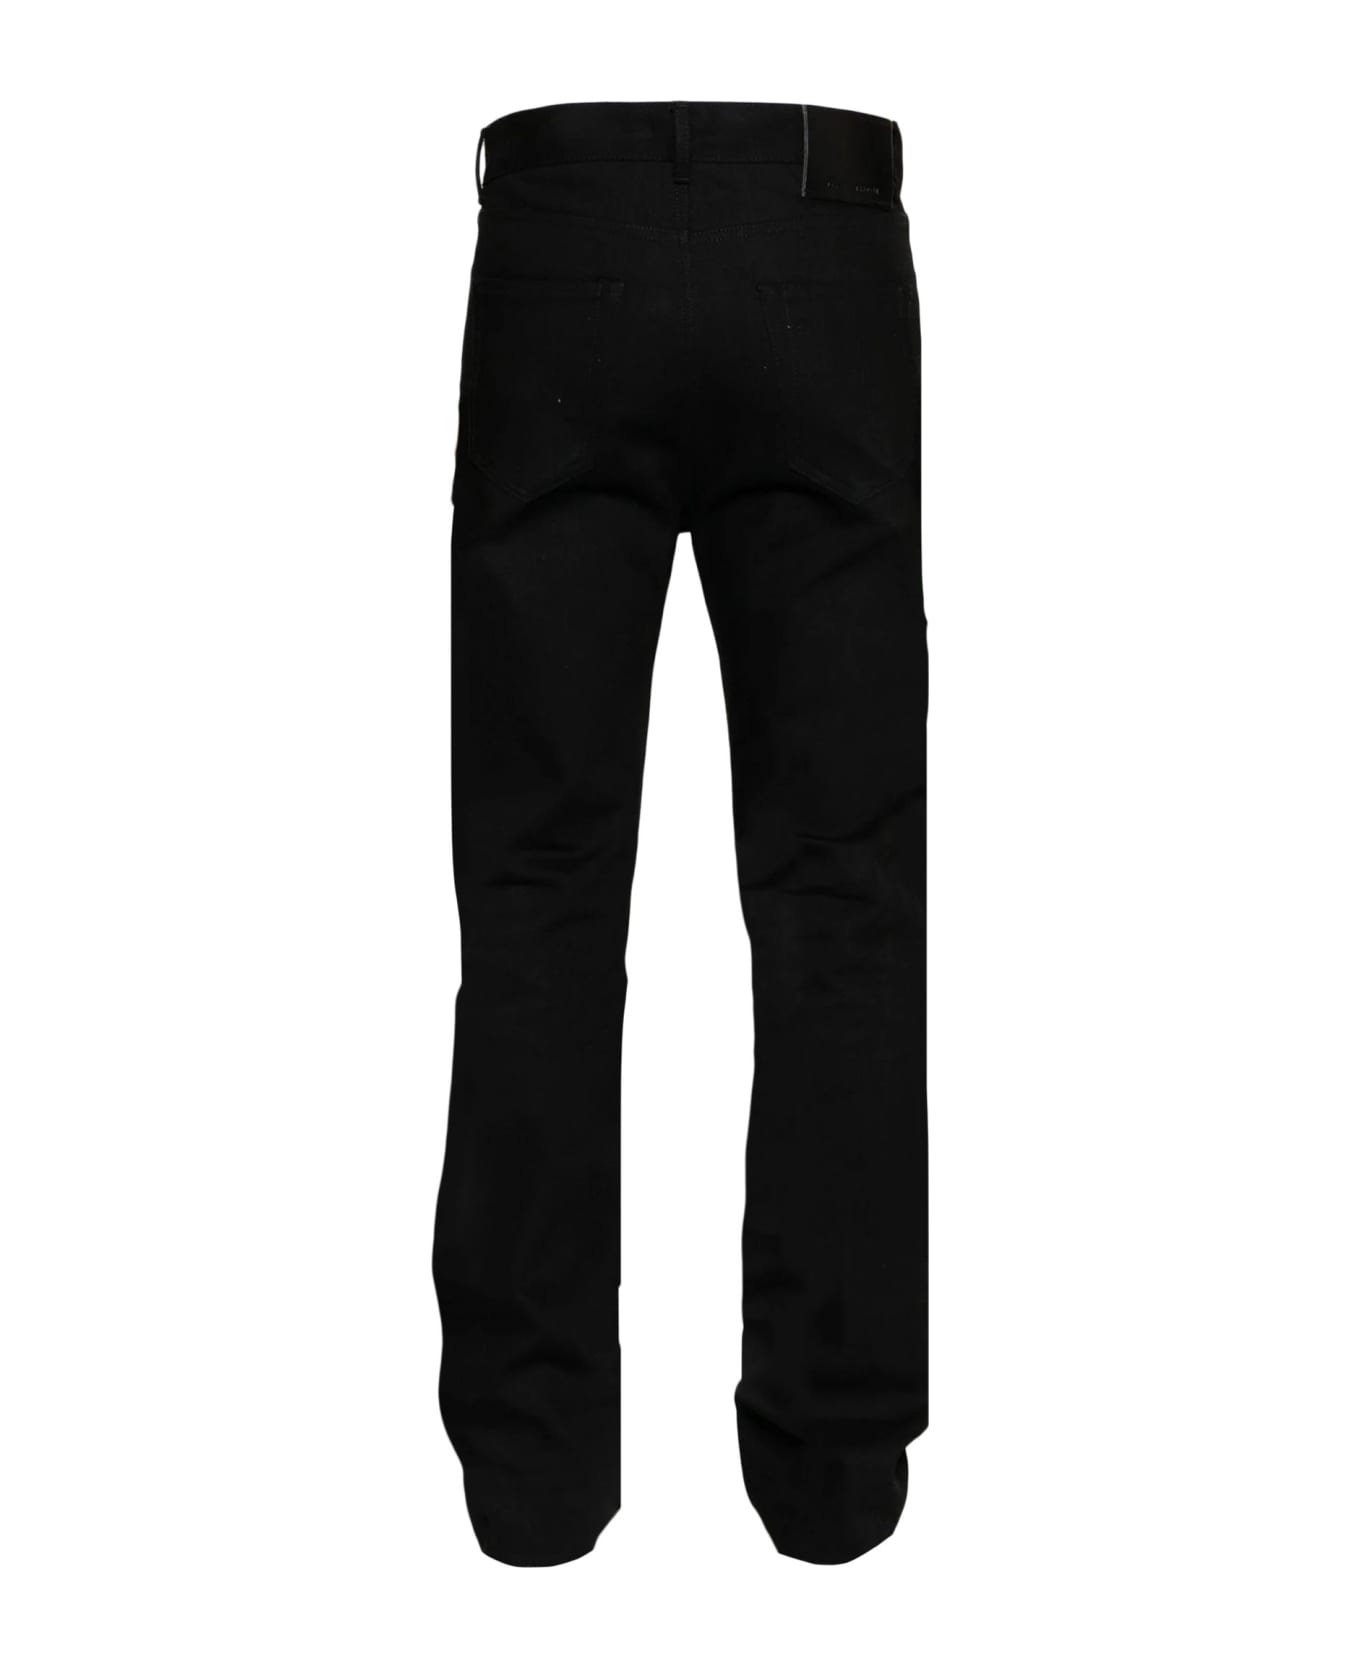 DRKSHDW Jeans Black - Black